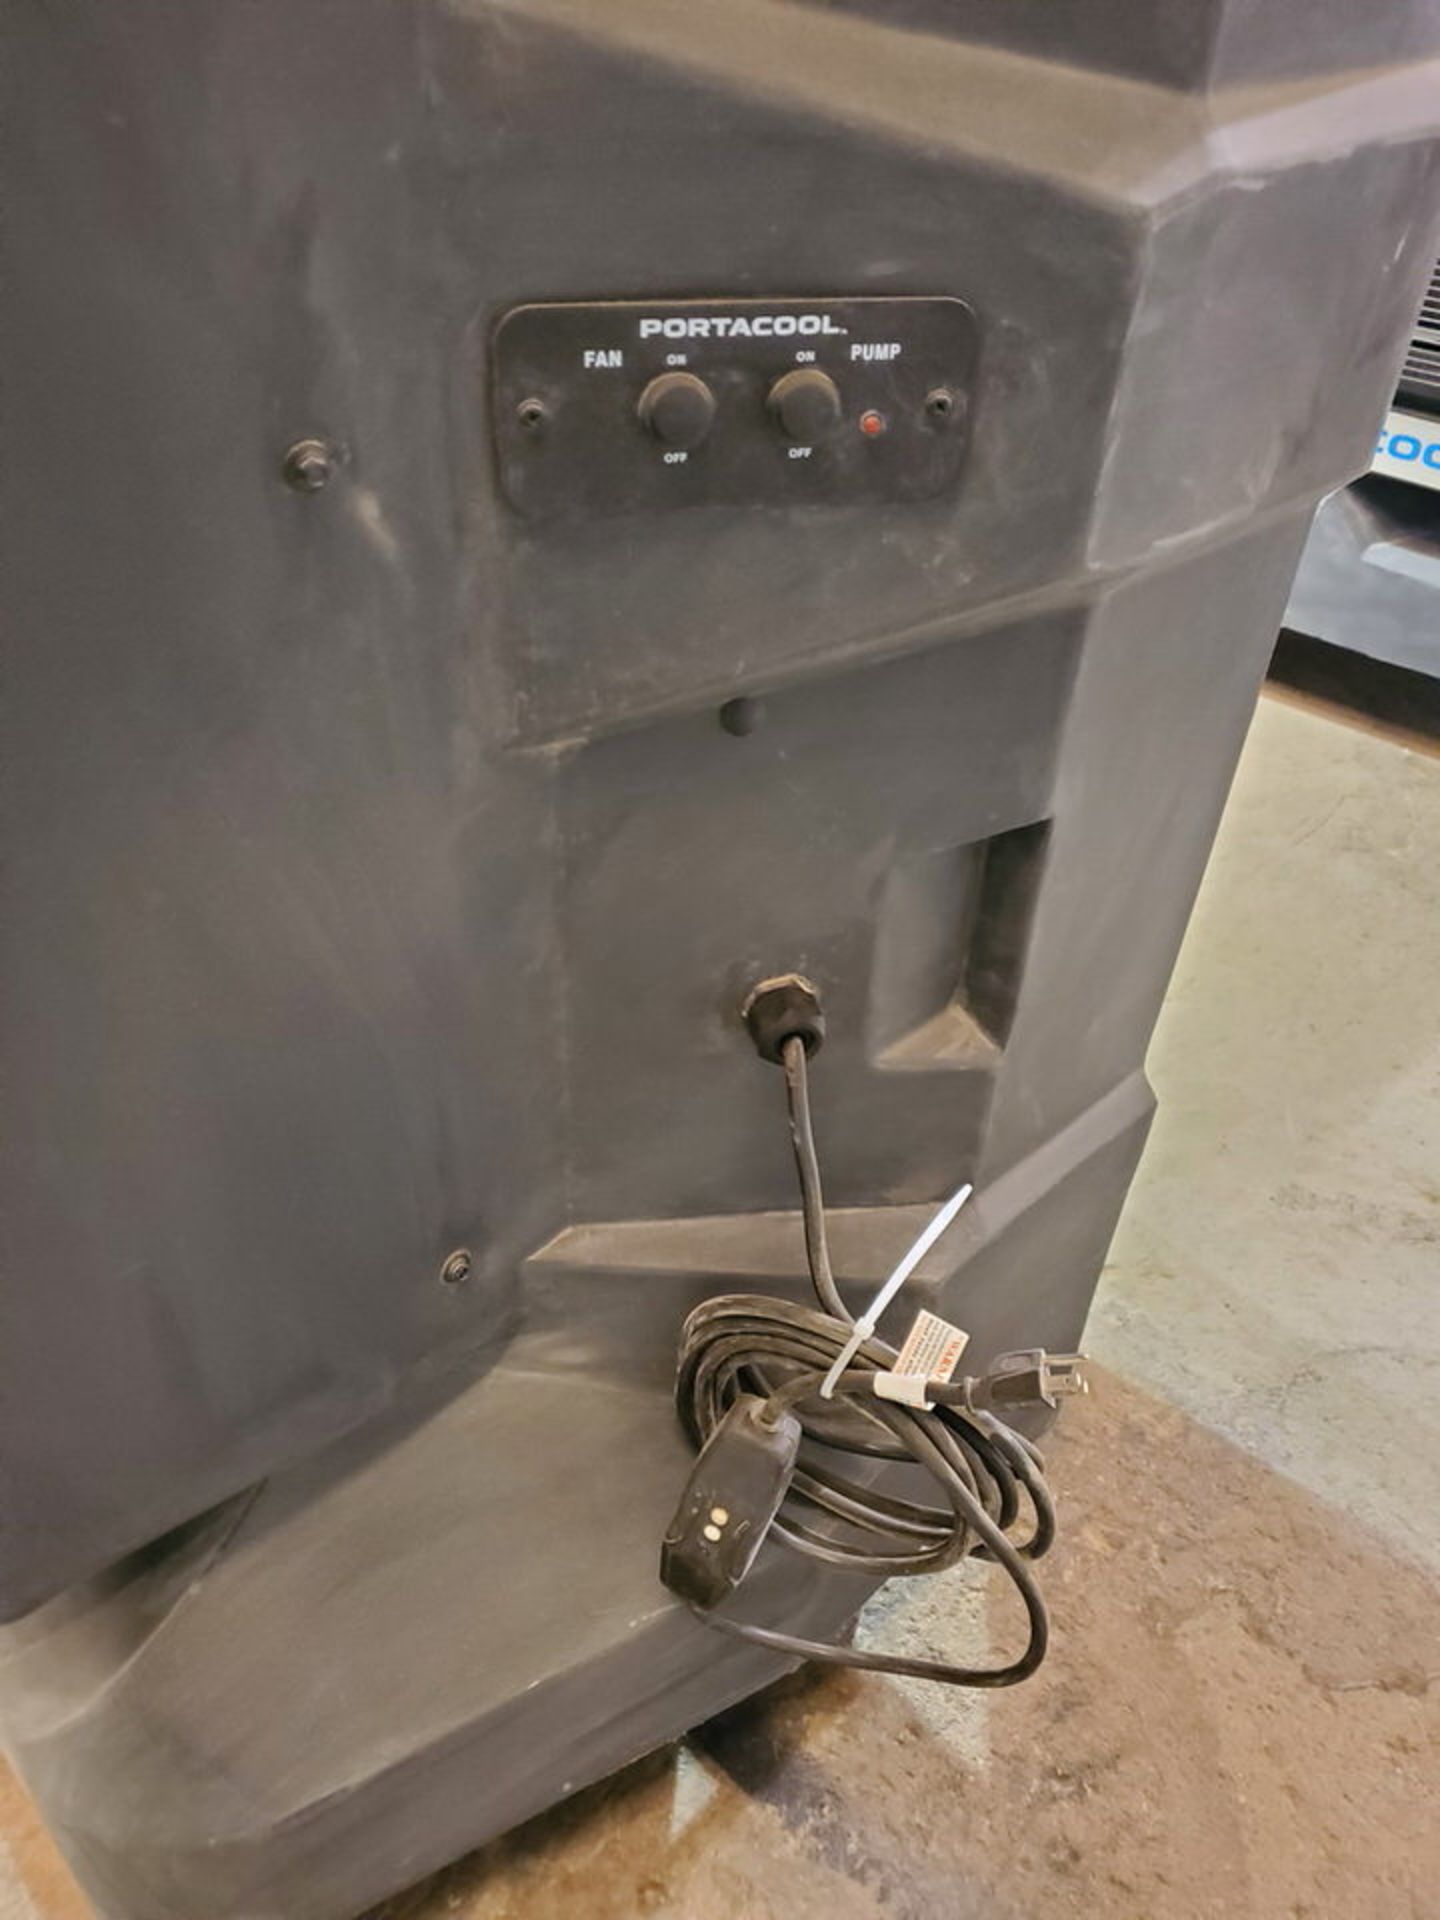 Portacool Cyclone 160 Portable Evaporative Cooler 115V, 60HZ, 7.3A - Image 6 of 7